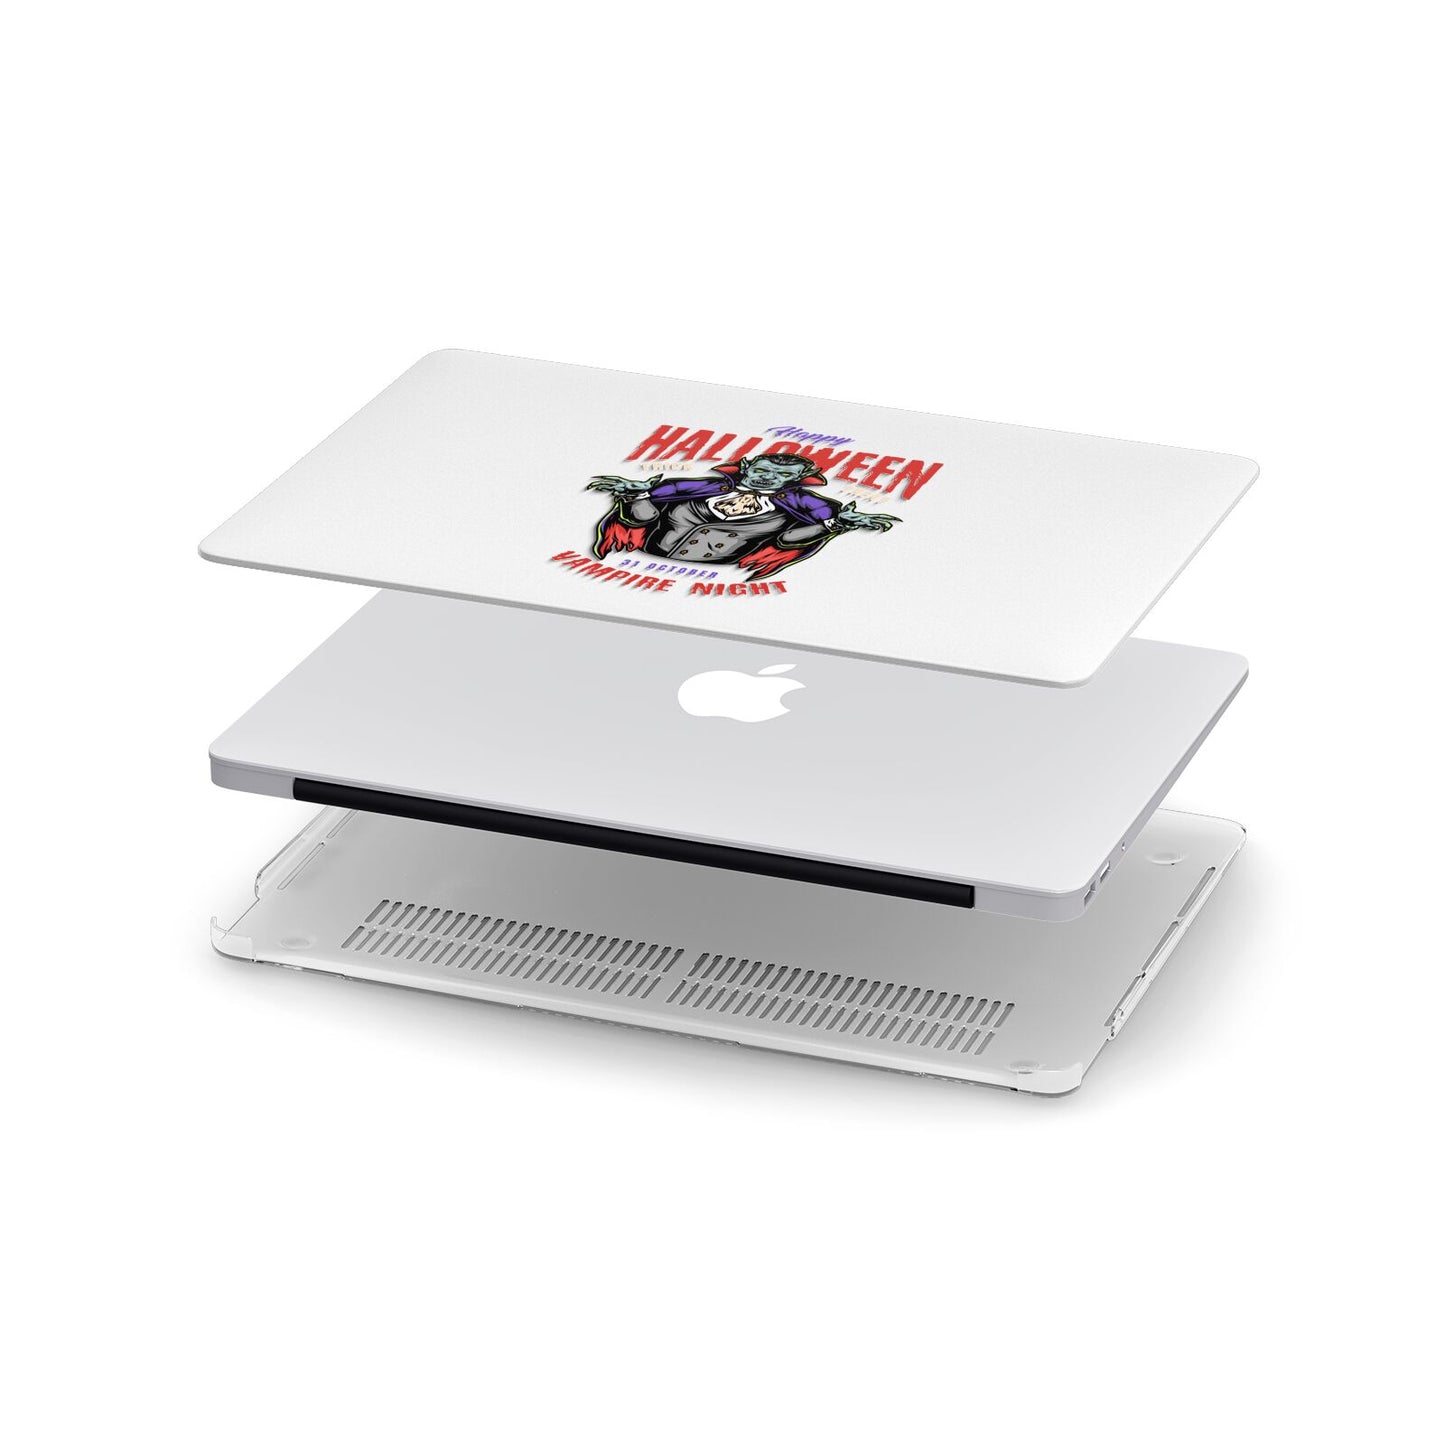 Vampire Night Apple MacBook Case in Detail